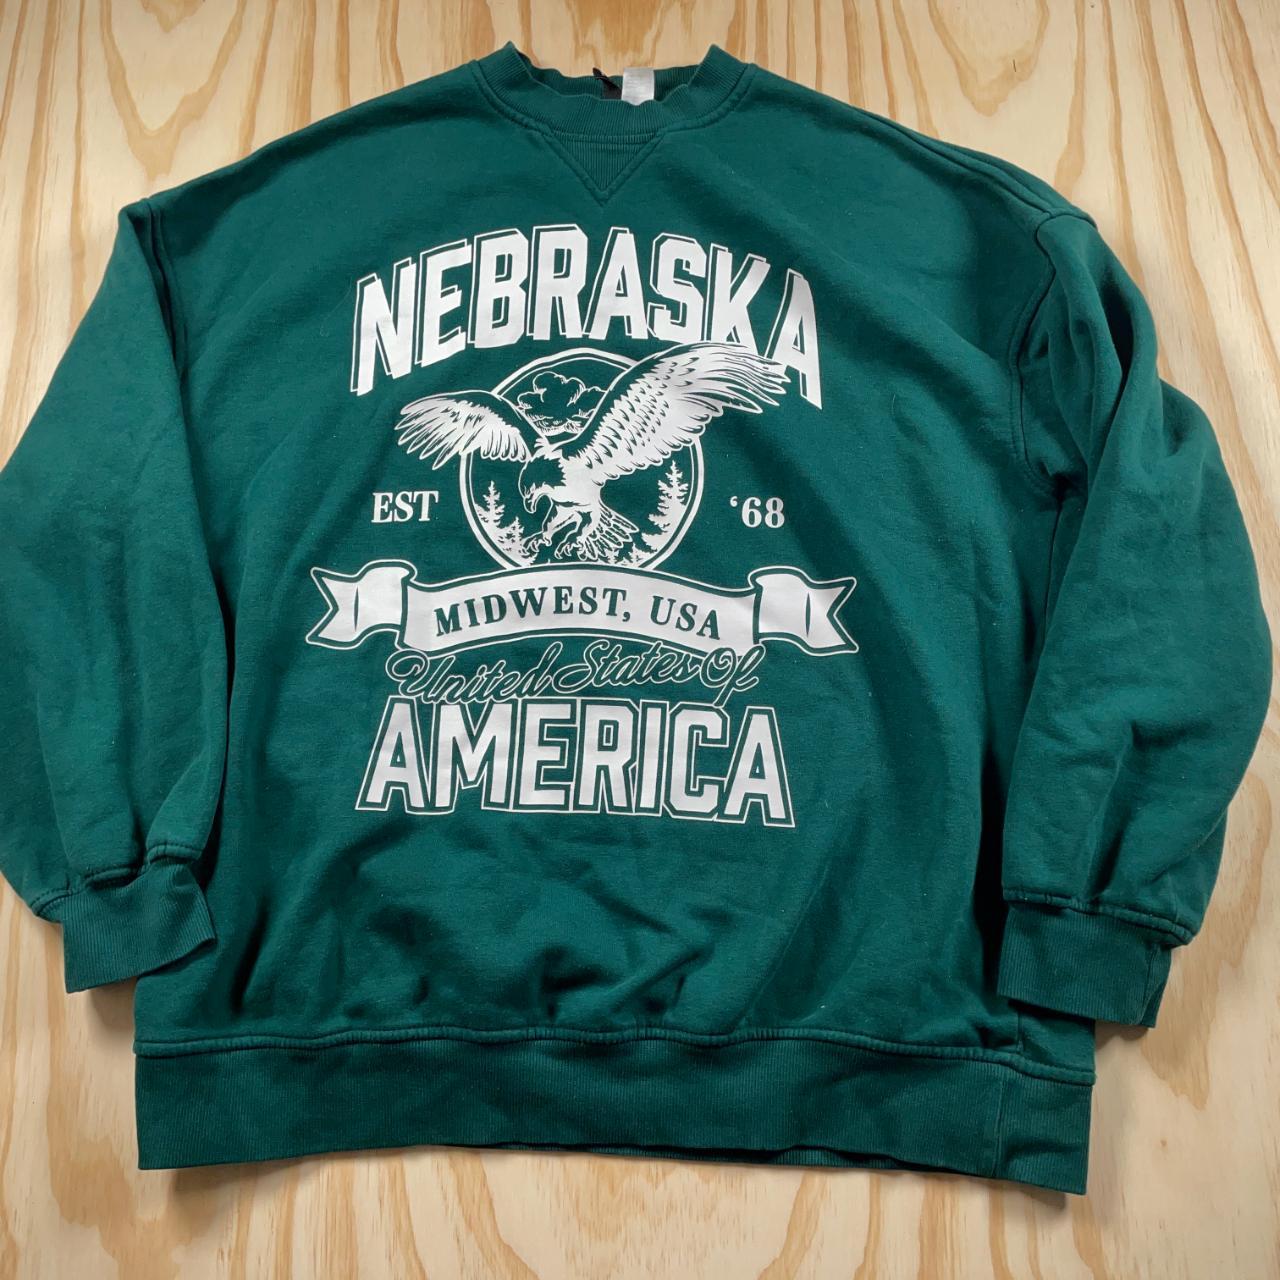 USA College Sweatshirt - Bottle Green